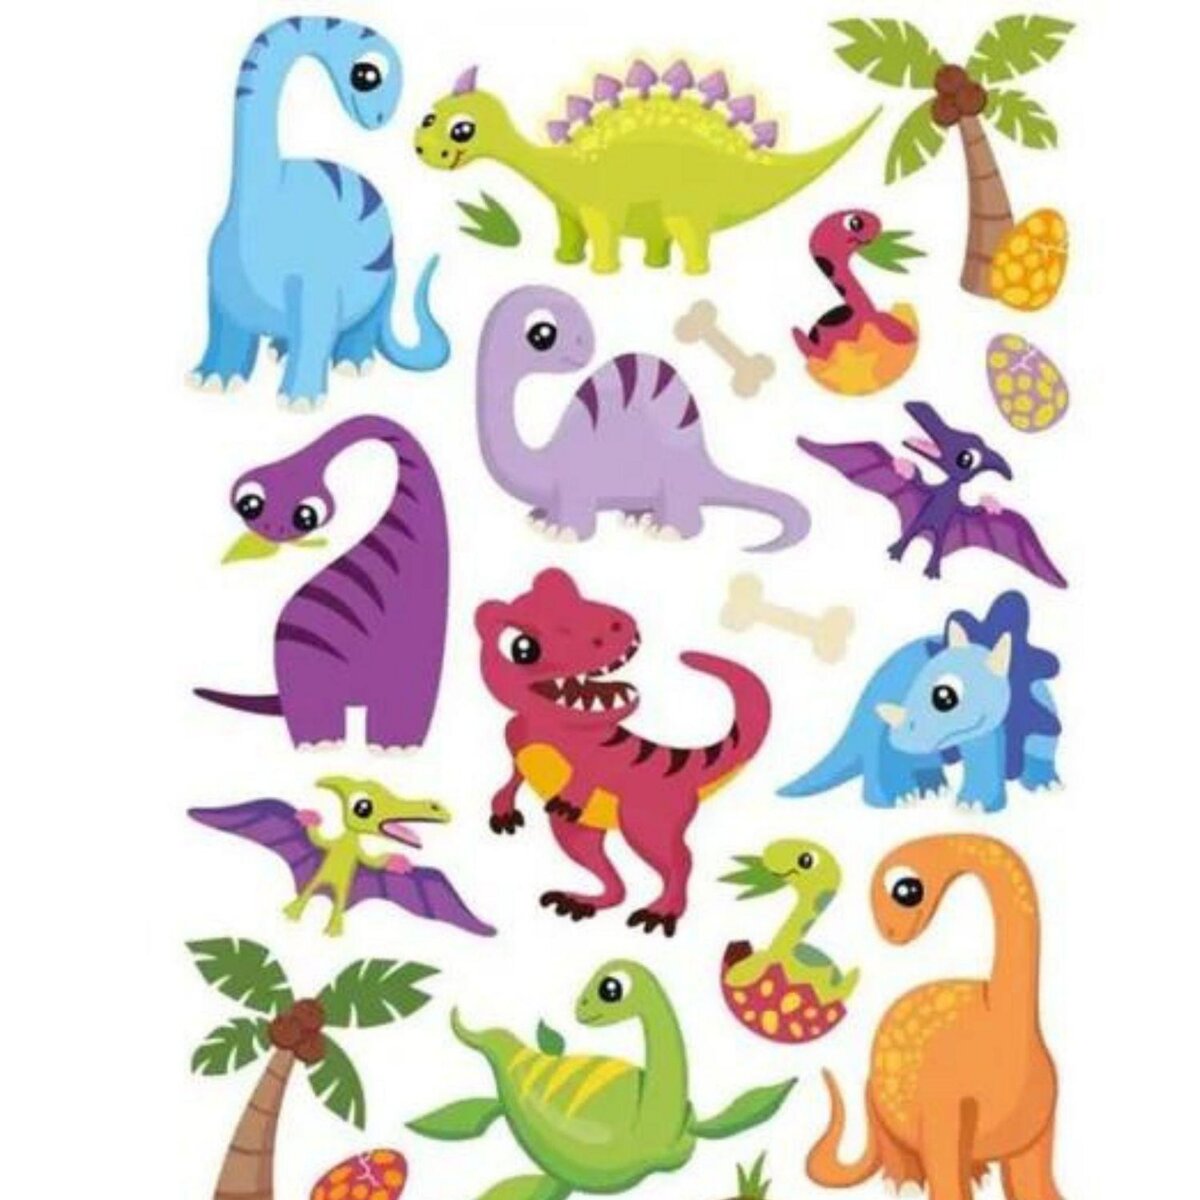 Stickers Dinosaures Pas Cher